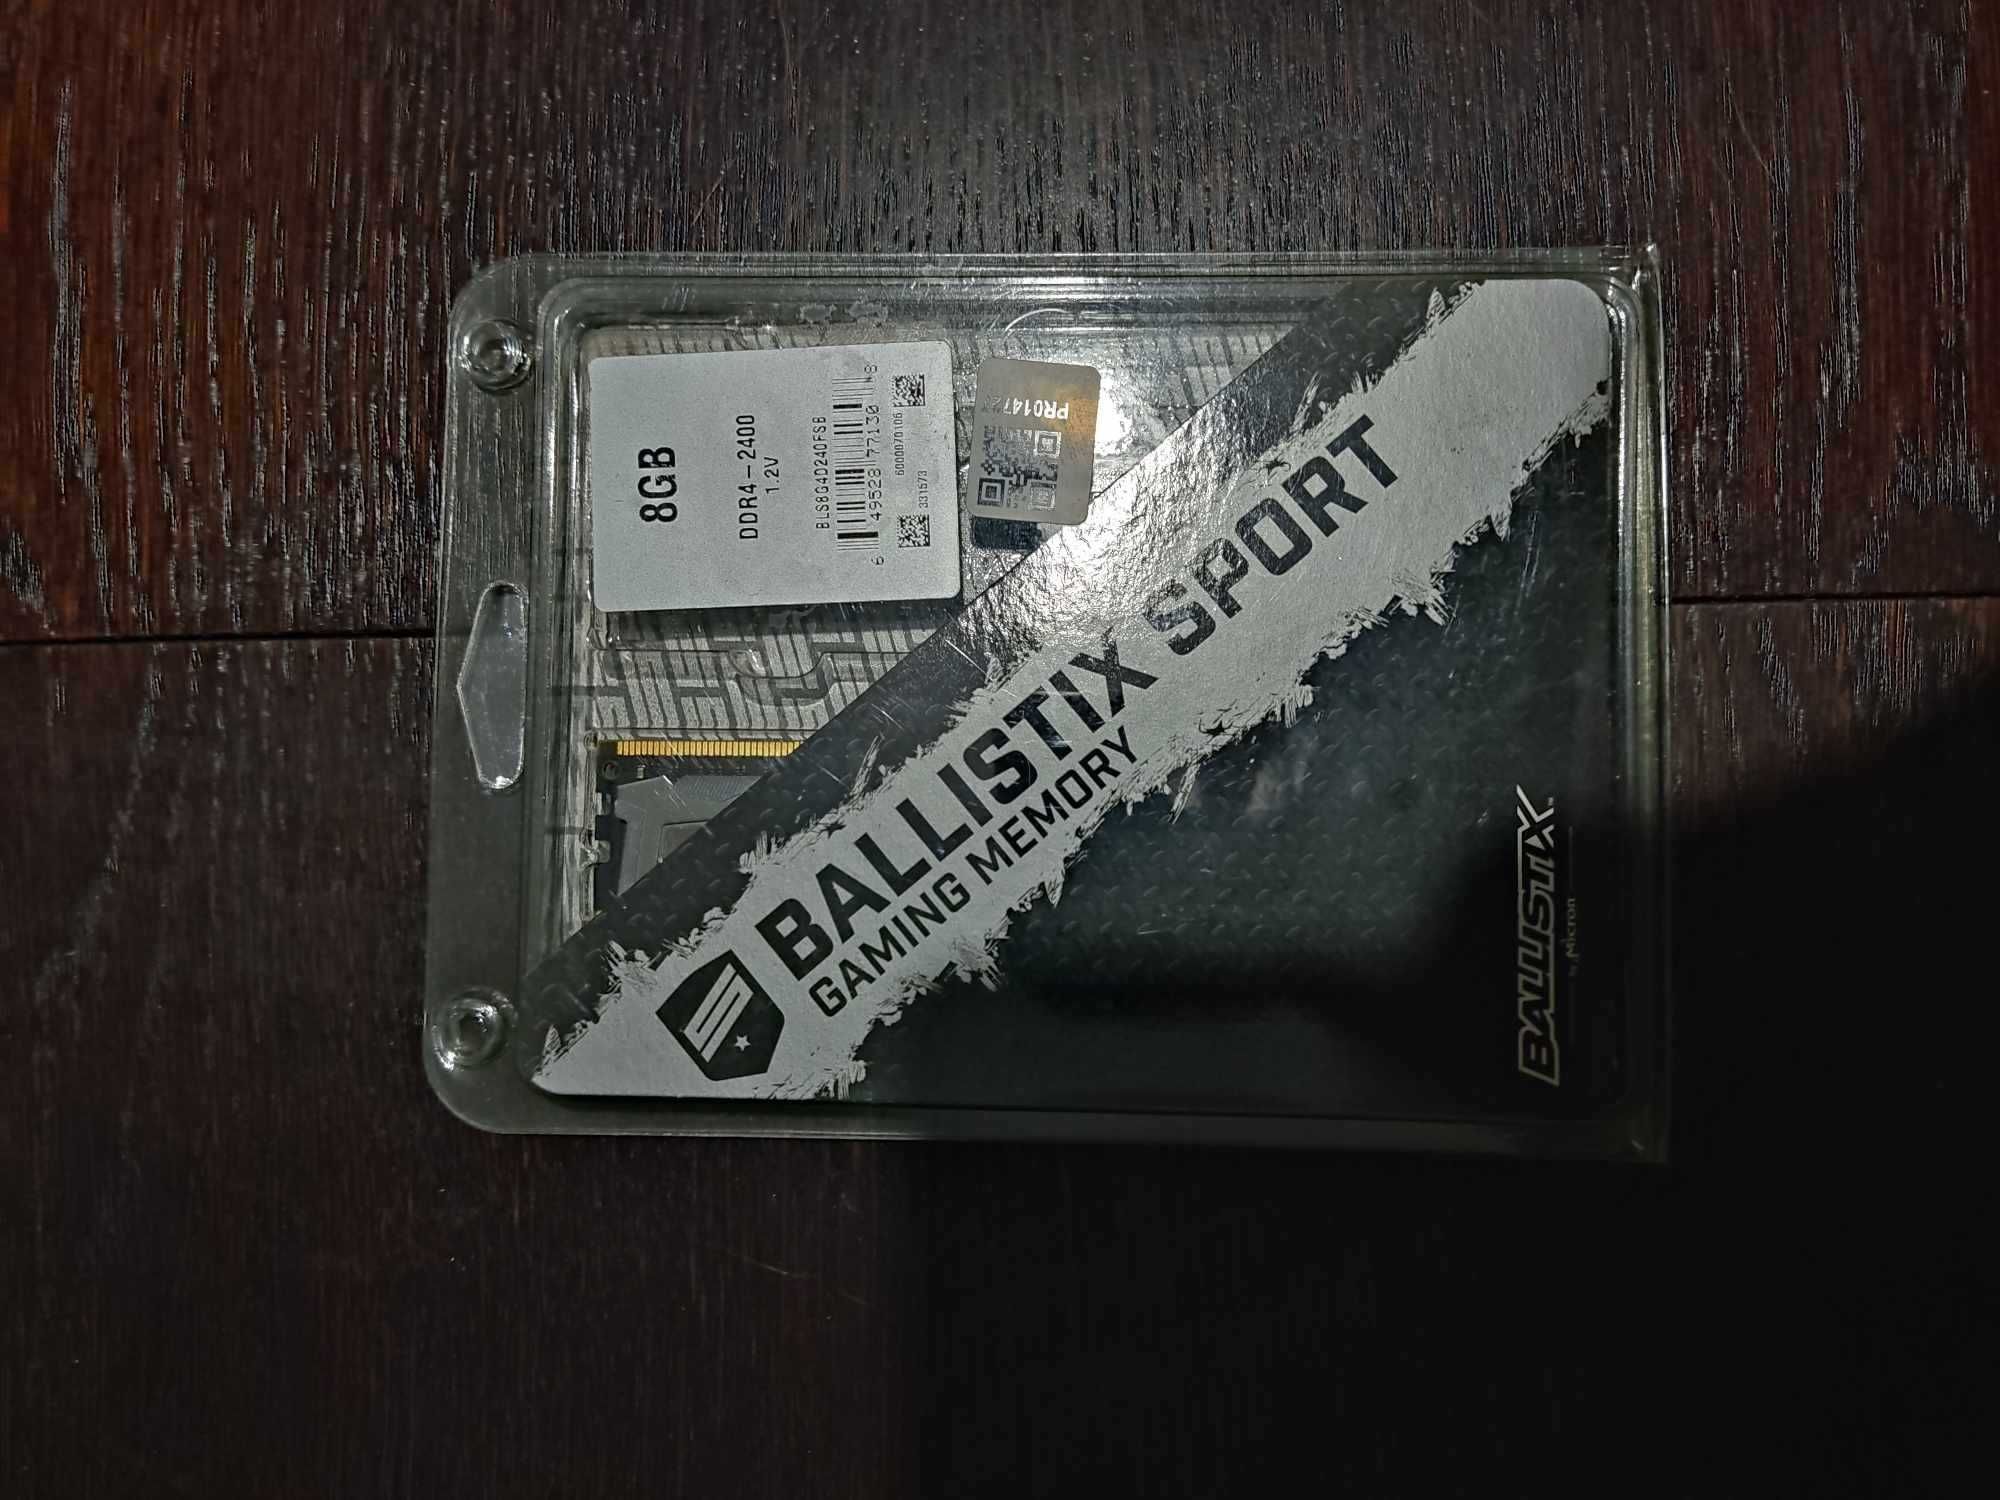 RAM ballistix 8GB